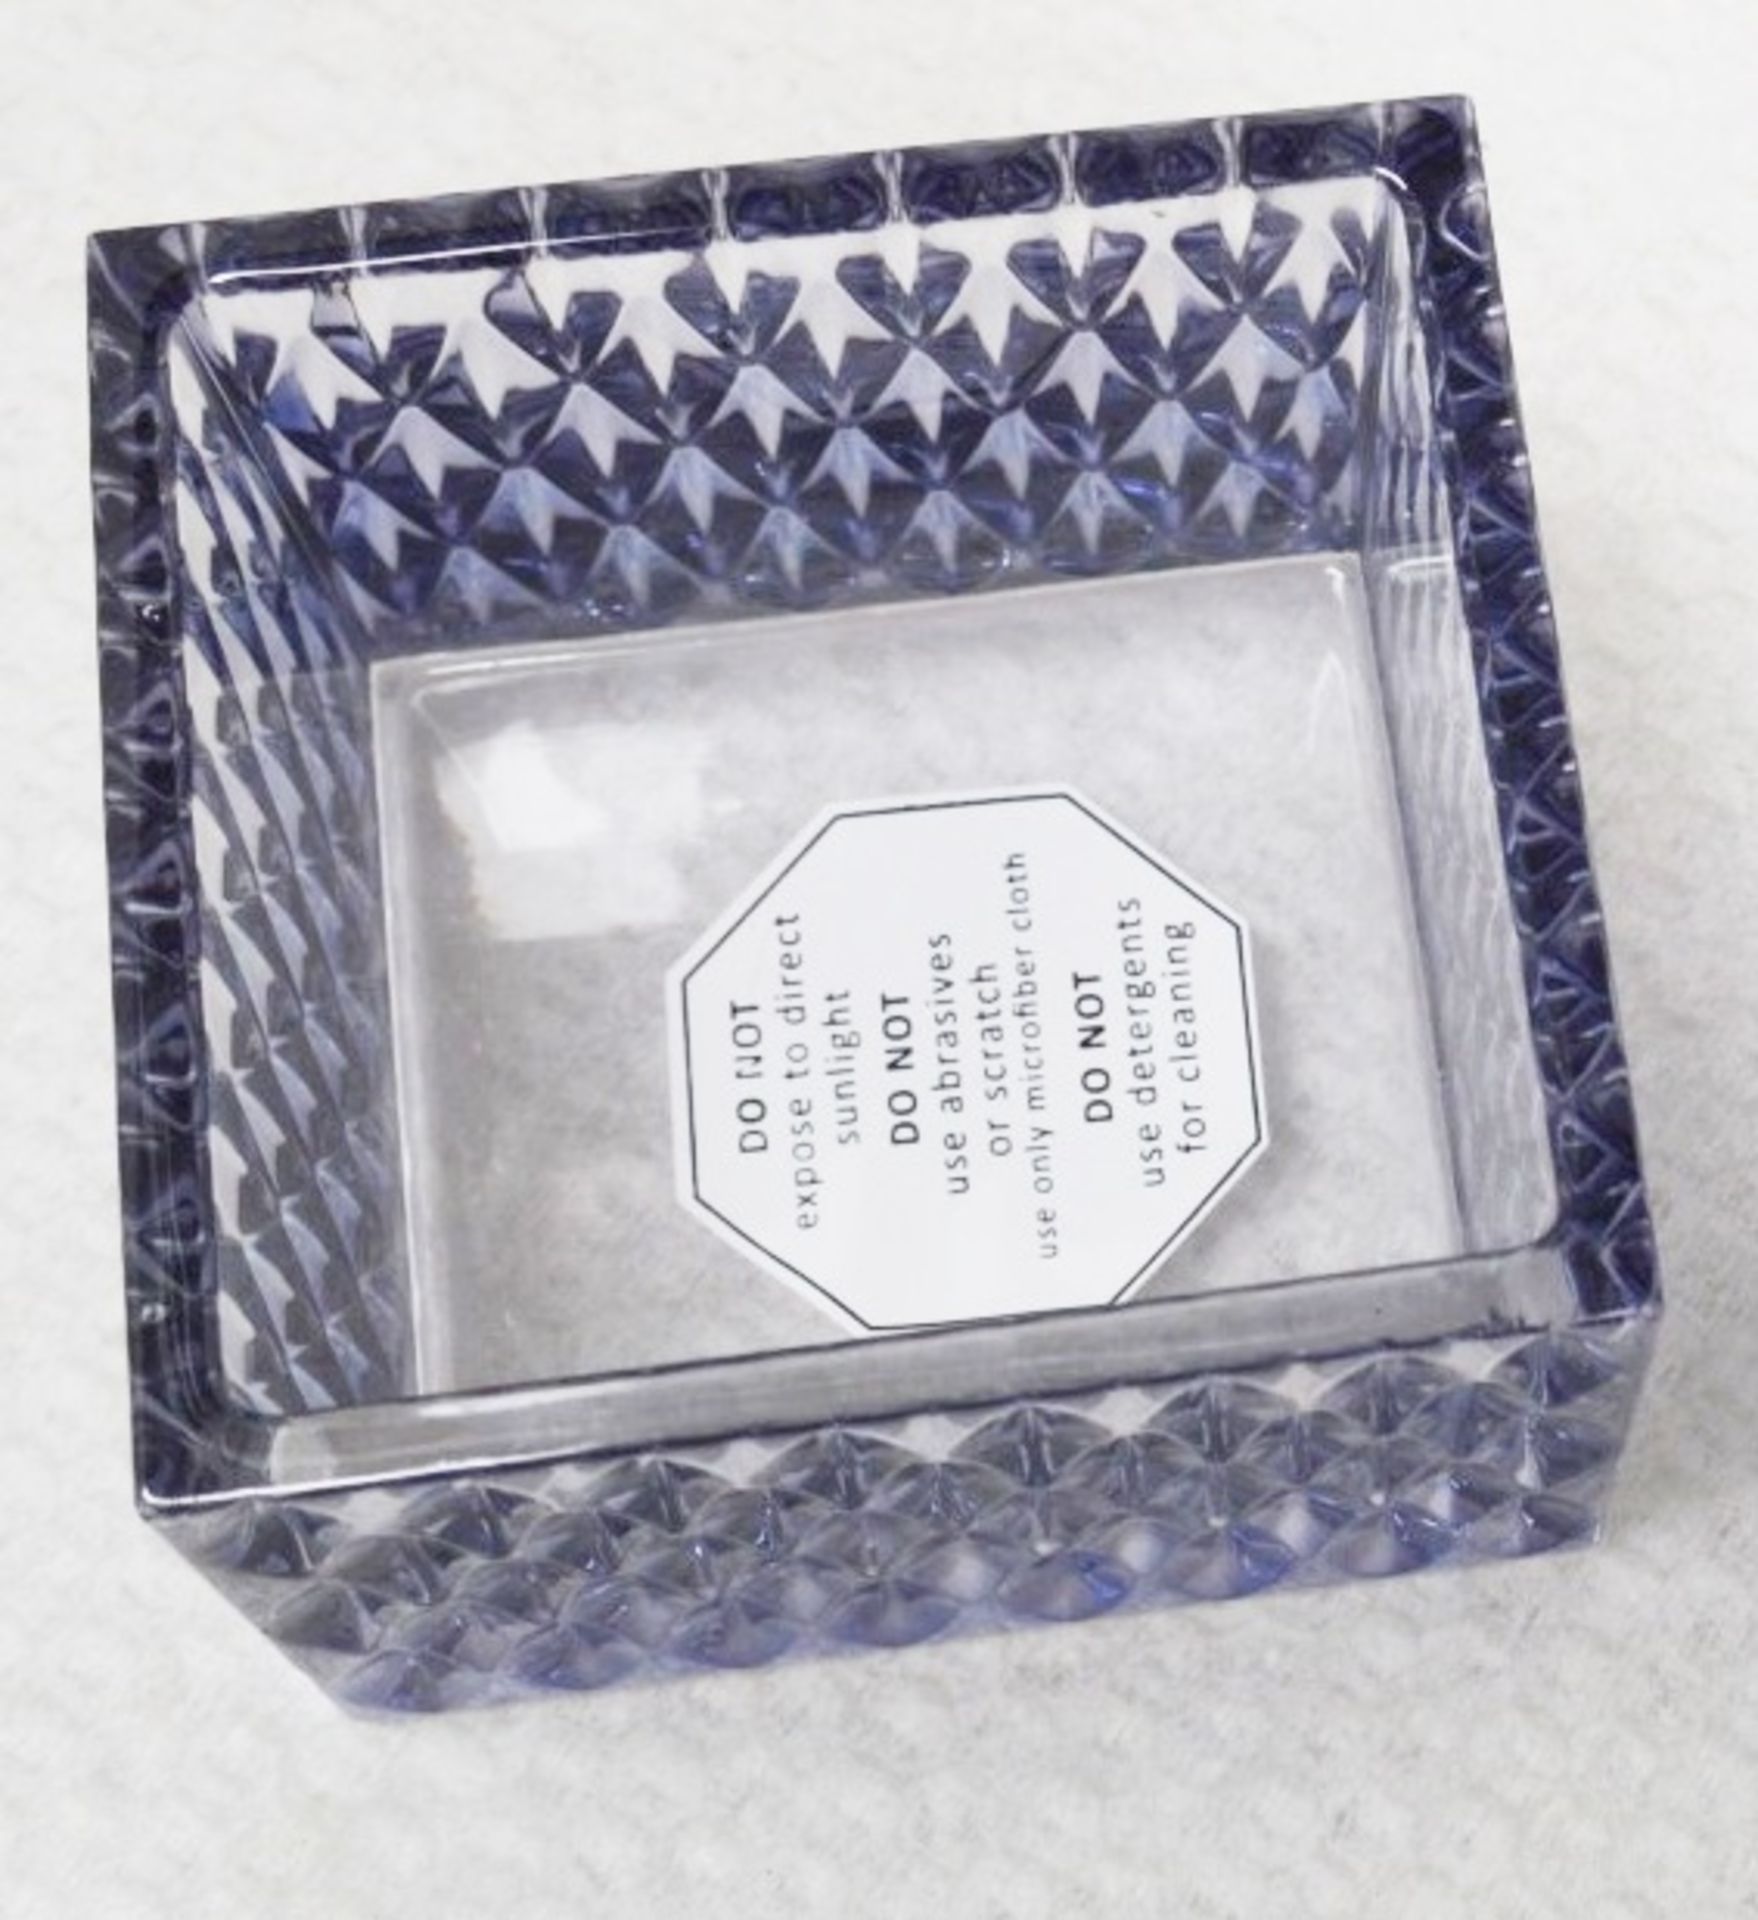 1 x BALDI 'Home Jewels' Italian Hand-crafted Artisan Perfume Box In Dark Blue Crystal - RRP £880.00 - Image 4 of 6